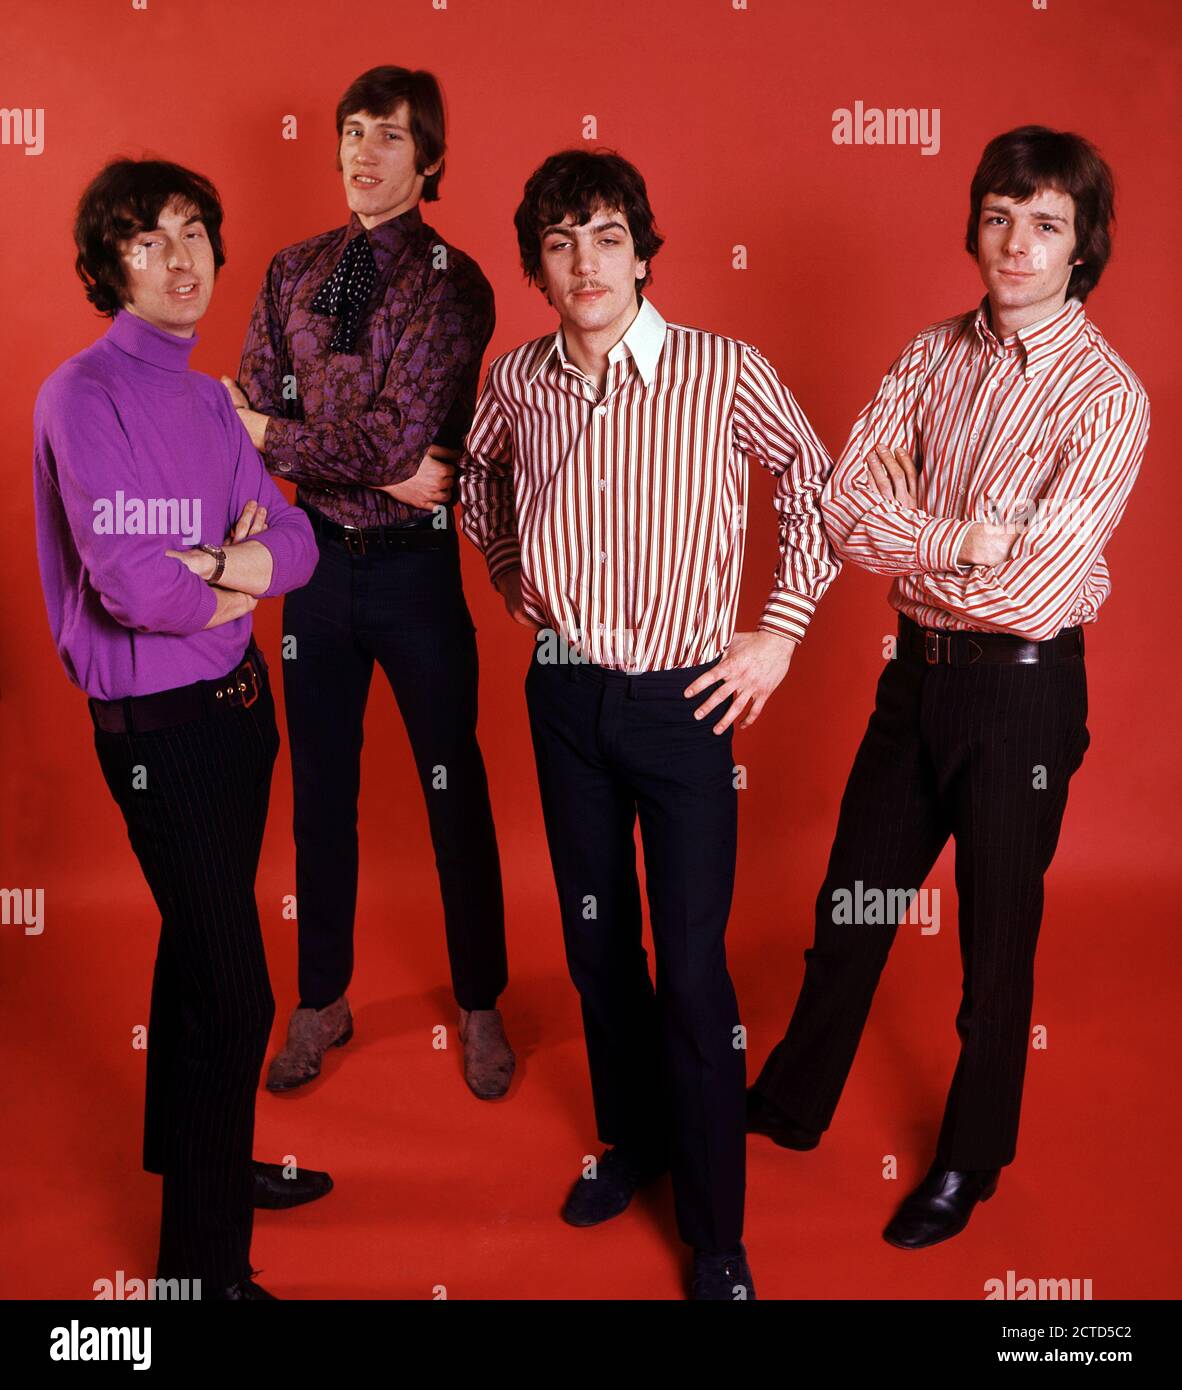 PINK FLOYD  UK rock group in January 1967. From left: Nick Mason, Roger Waters, Syd Barrett, Richard Wright.  Photo Tony Gale Stock Photo